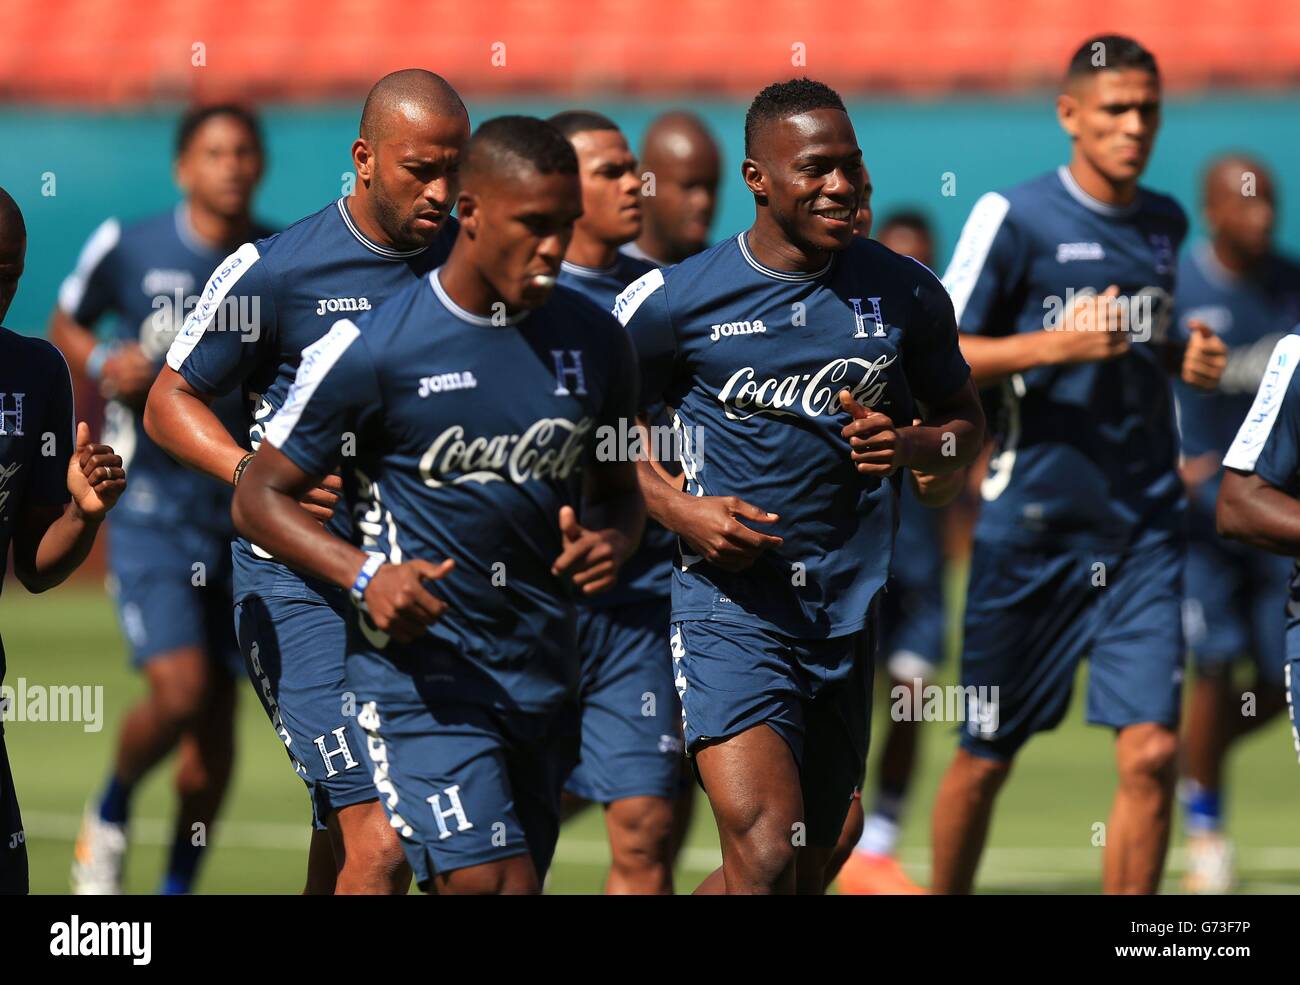 Soccer - World Cup 2014 - Miami Training Camp - England v Honduras - Honduras Training Session - Sun Life Stadium Stock Photo